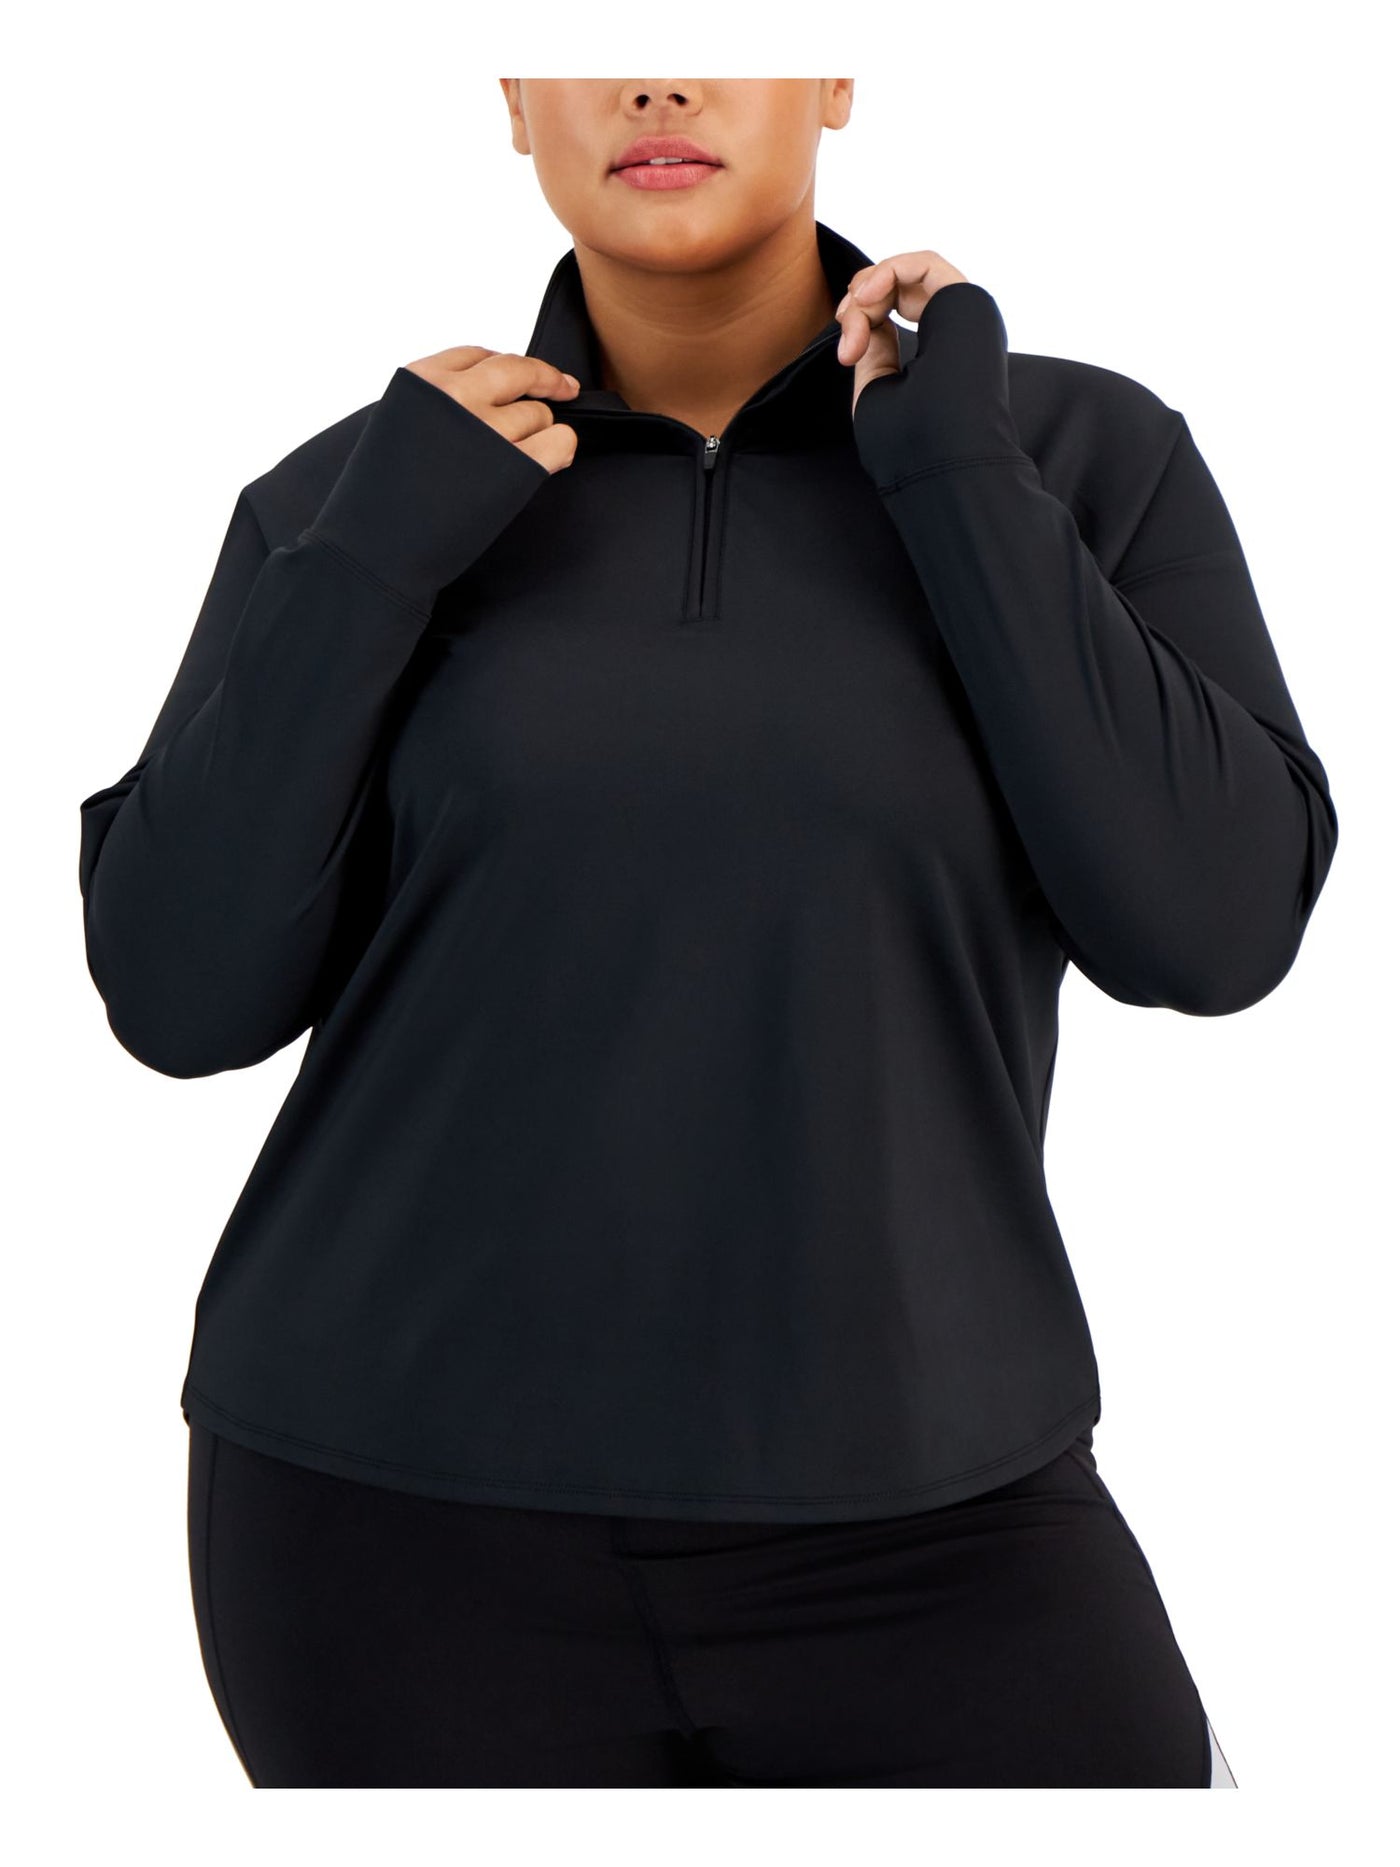 I-D IDEOLOGY Womens Black Sweatshirt Plus 1X